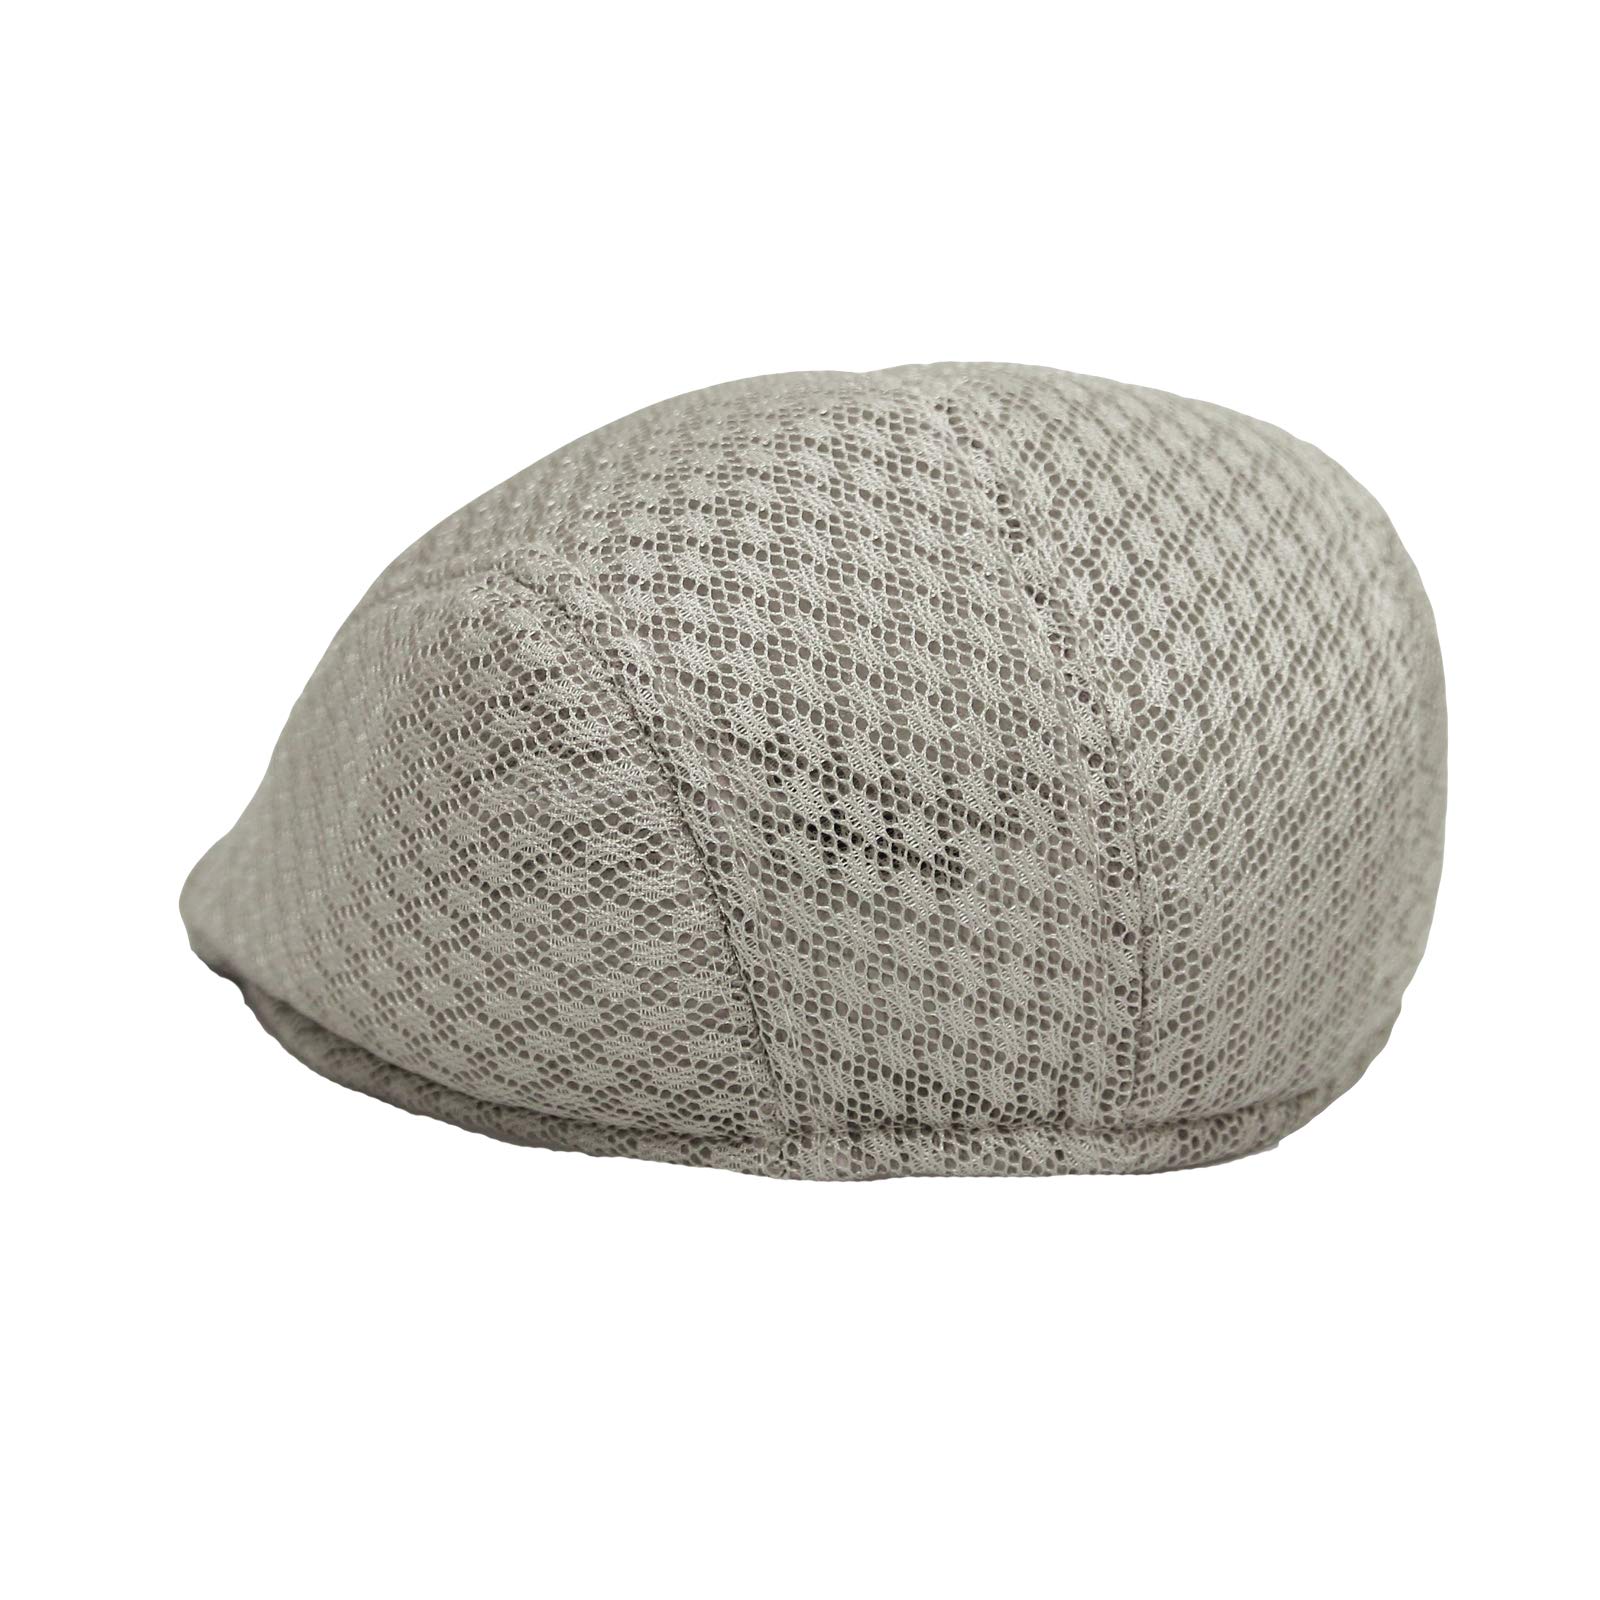 WITHMOONS Summer Cool Mesh Hunting Hat for Men Women UZ30053